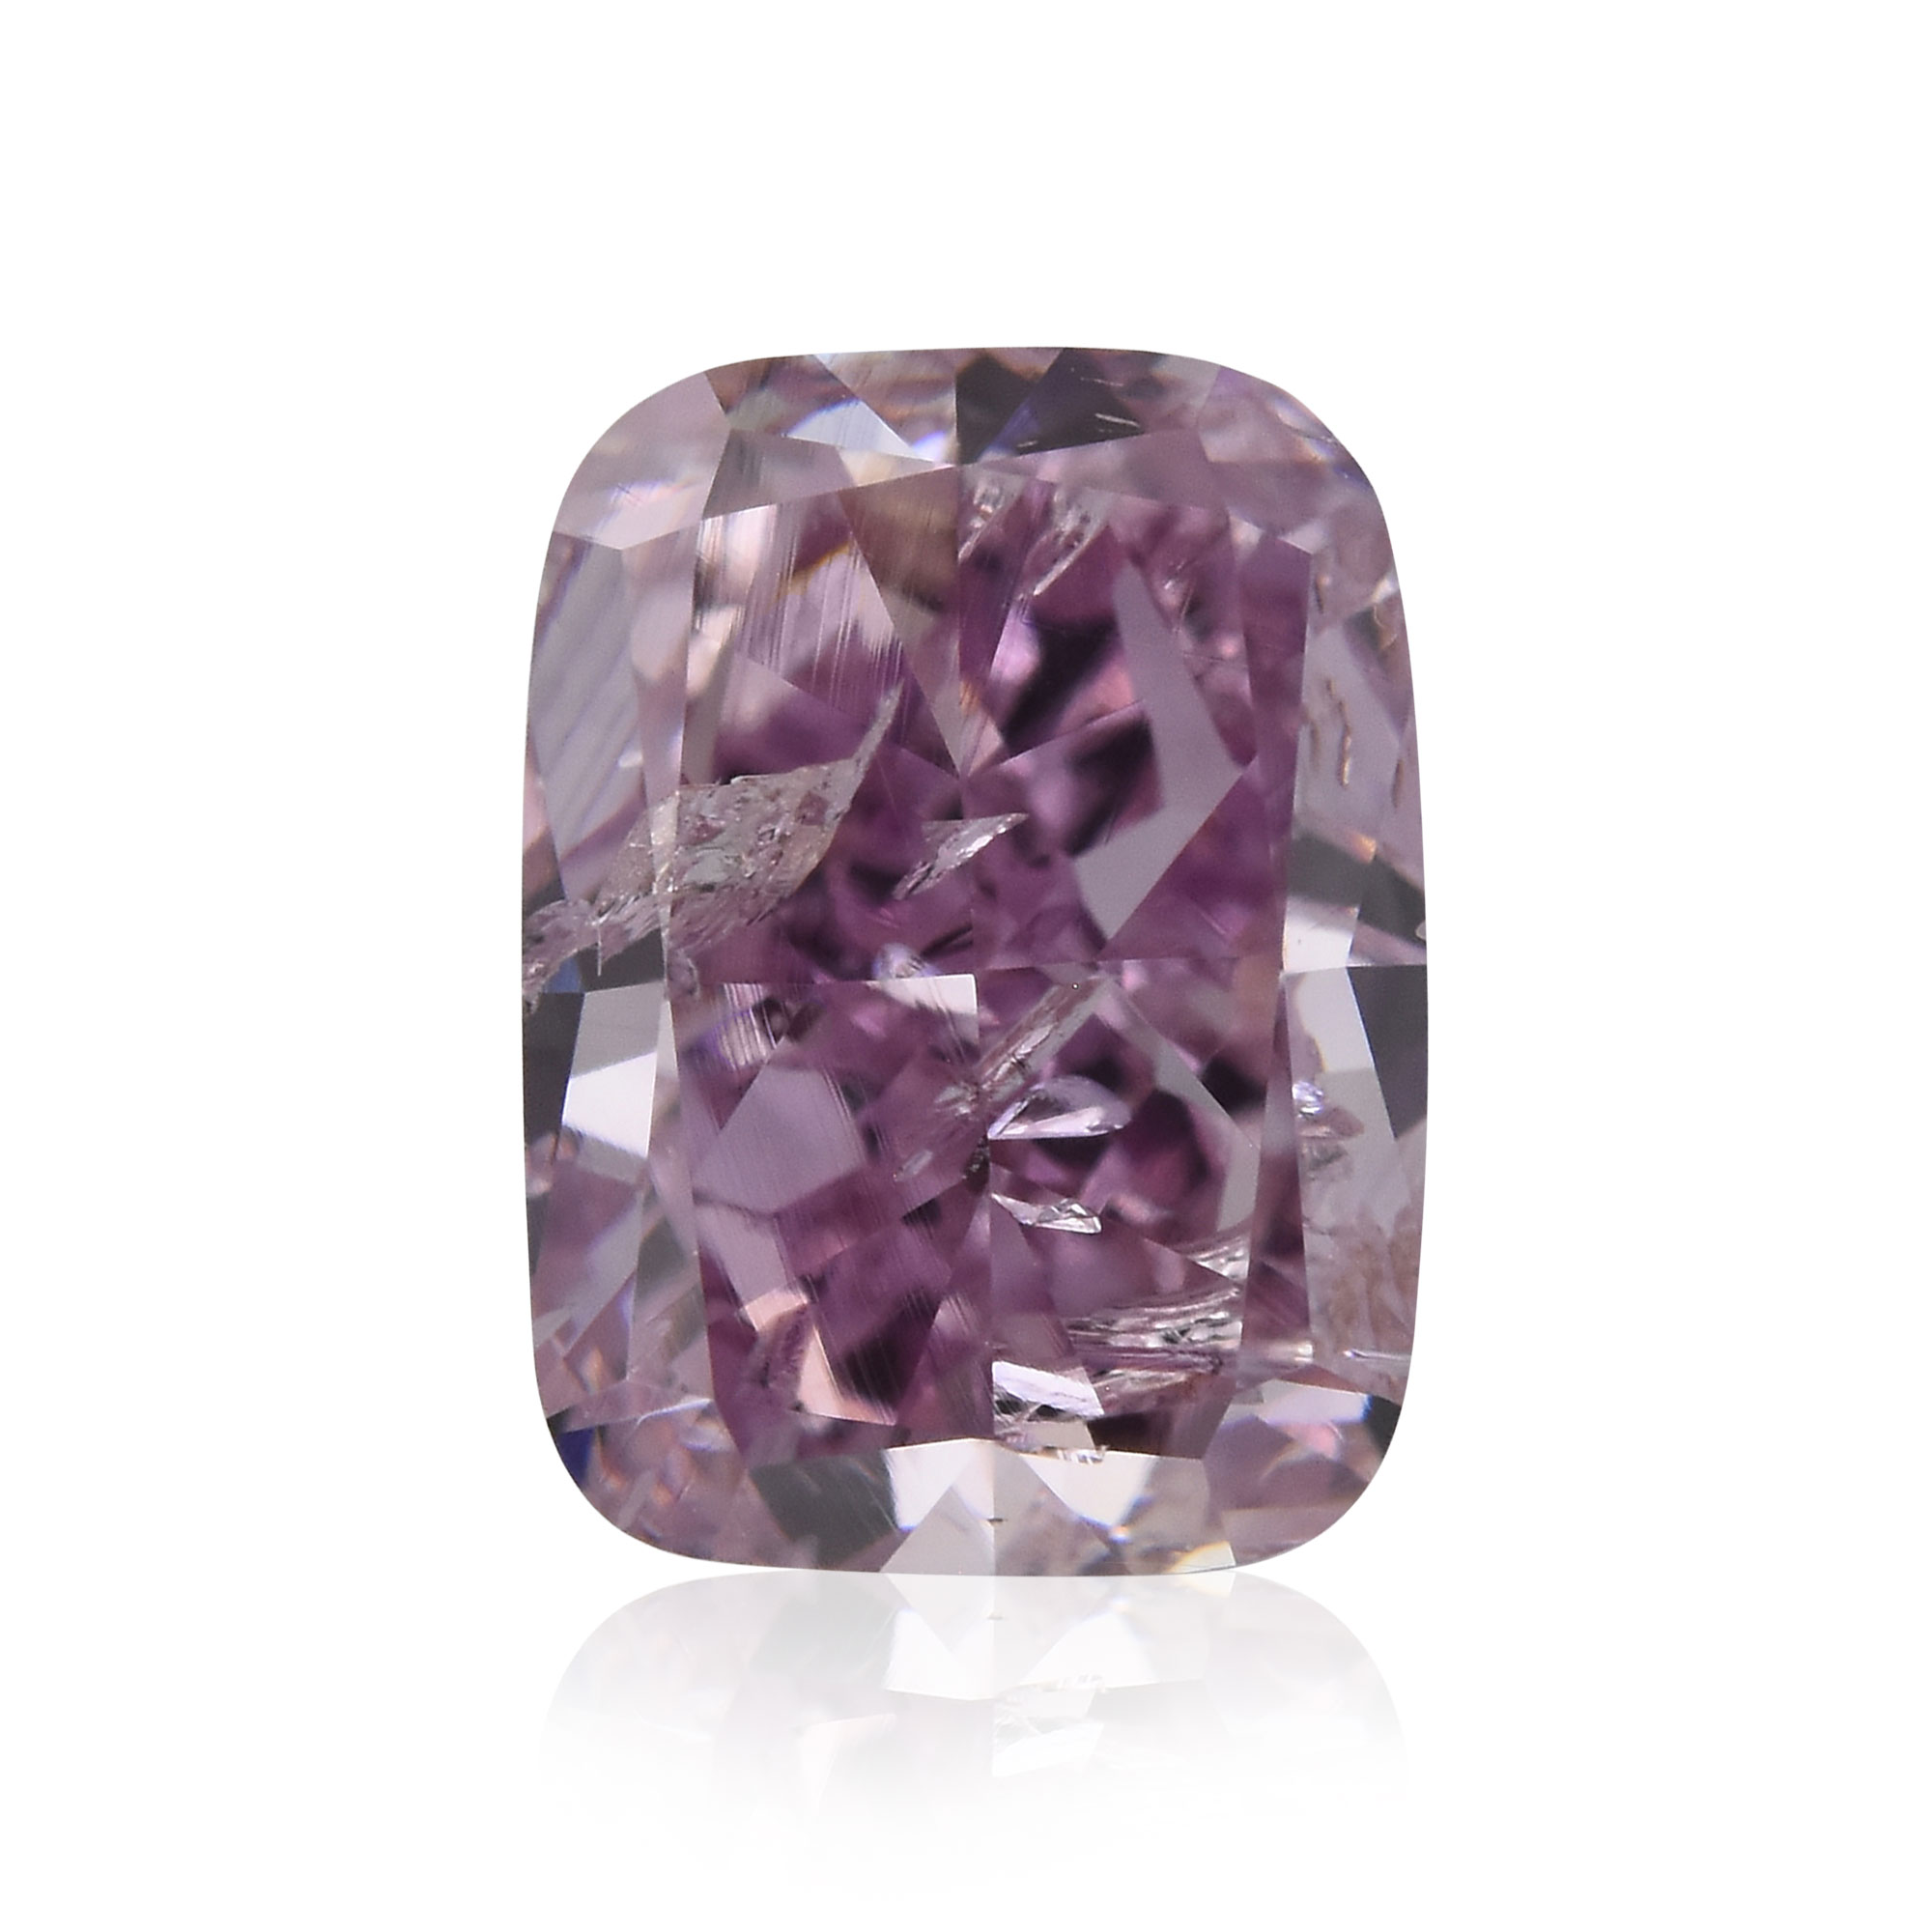 1.02 carat, Fancy Intense Purple Pink Diamond, Cushion Shape, (SI2)  Clarity, GIA, SKU 401407